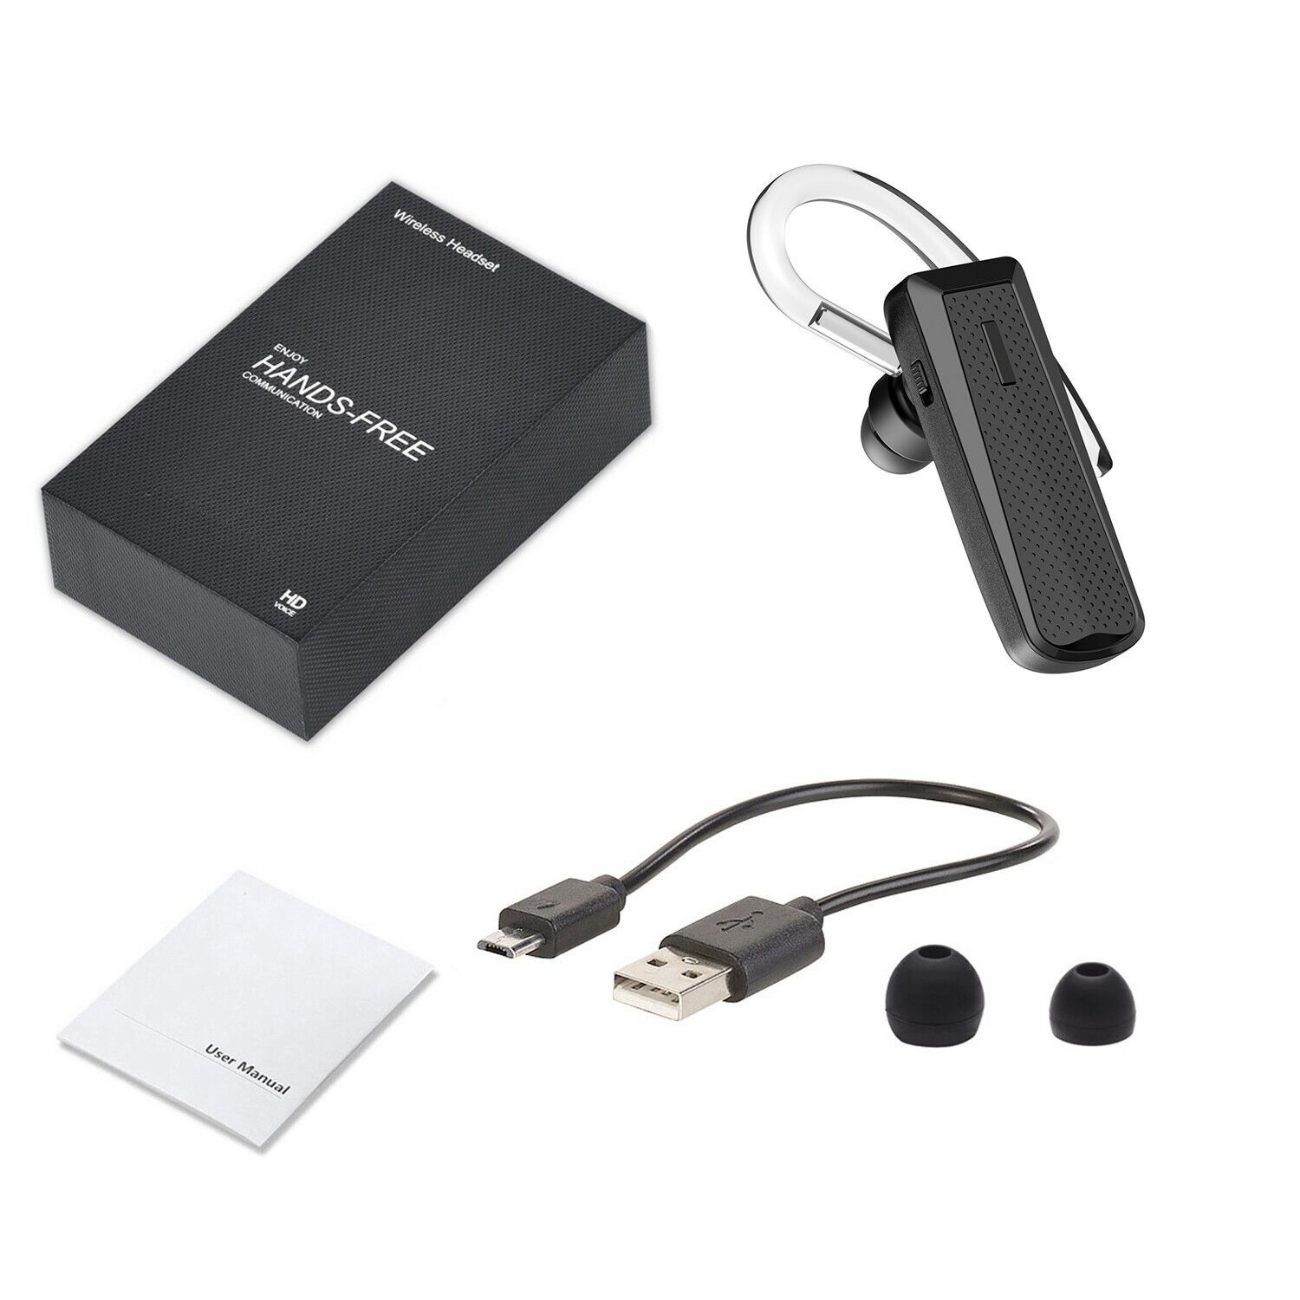 HAPPYSET Bluetooth Bluetooth Headset In-ear Short, Schwarz